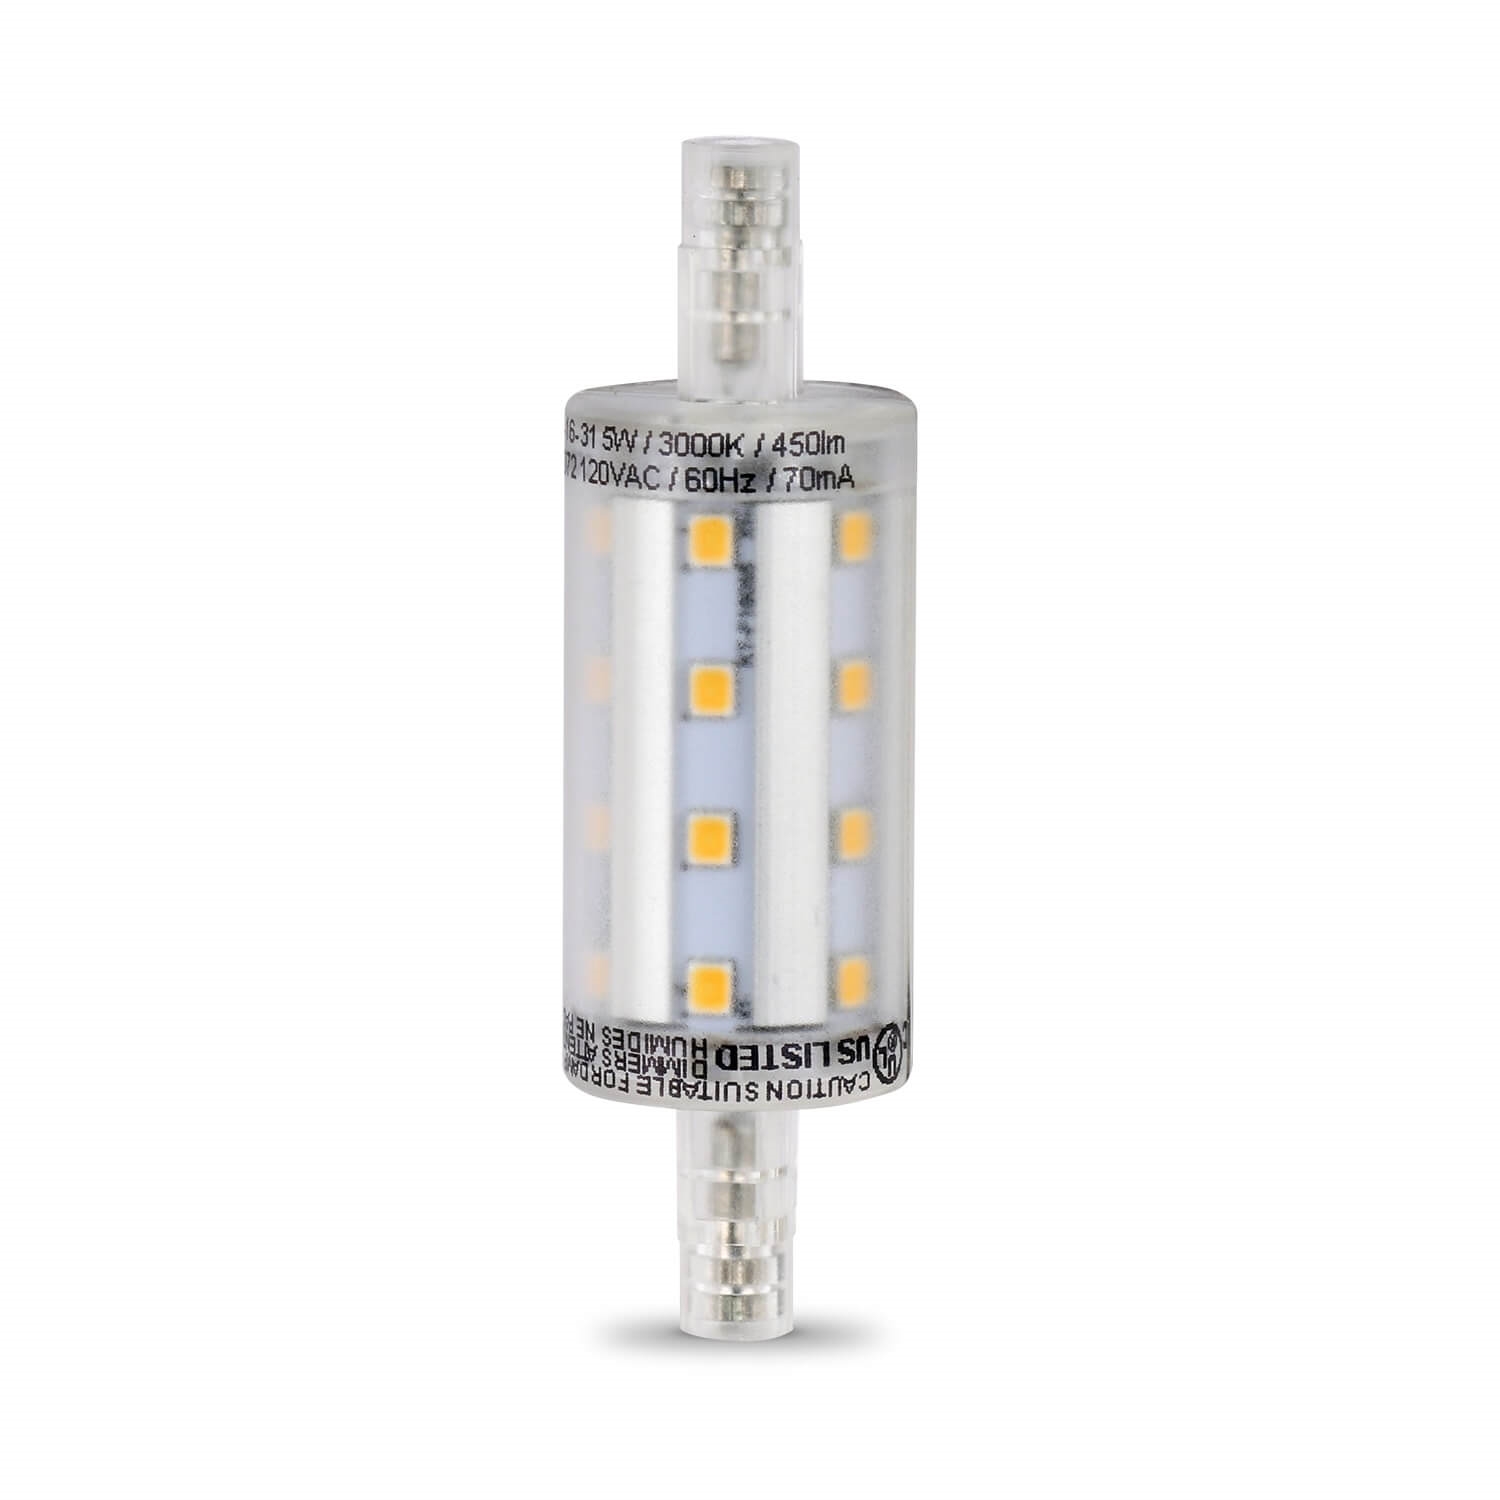 BPJ78/LED LED Lamp, Flood/Spotlight, R7S Lamp, 40 W Equivalent, R7 Lamp Base, Clear, Warm White Light